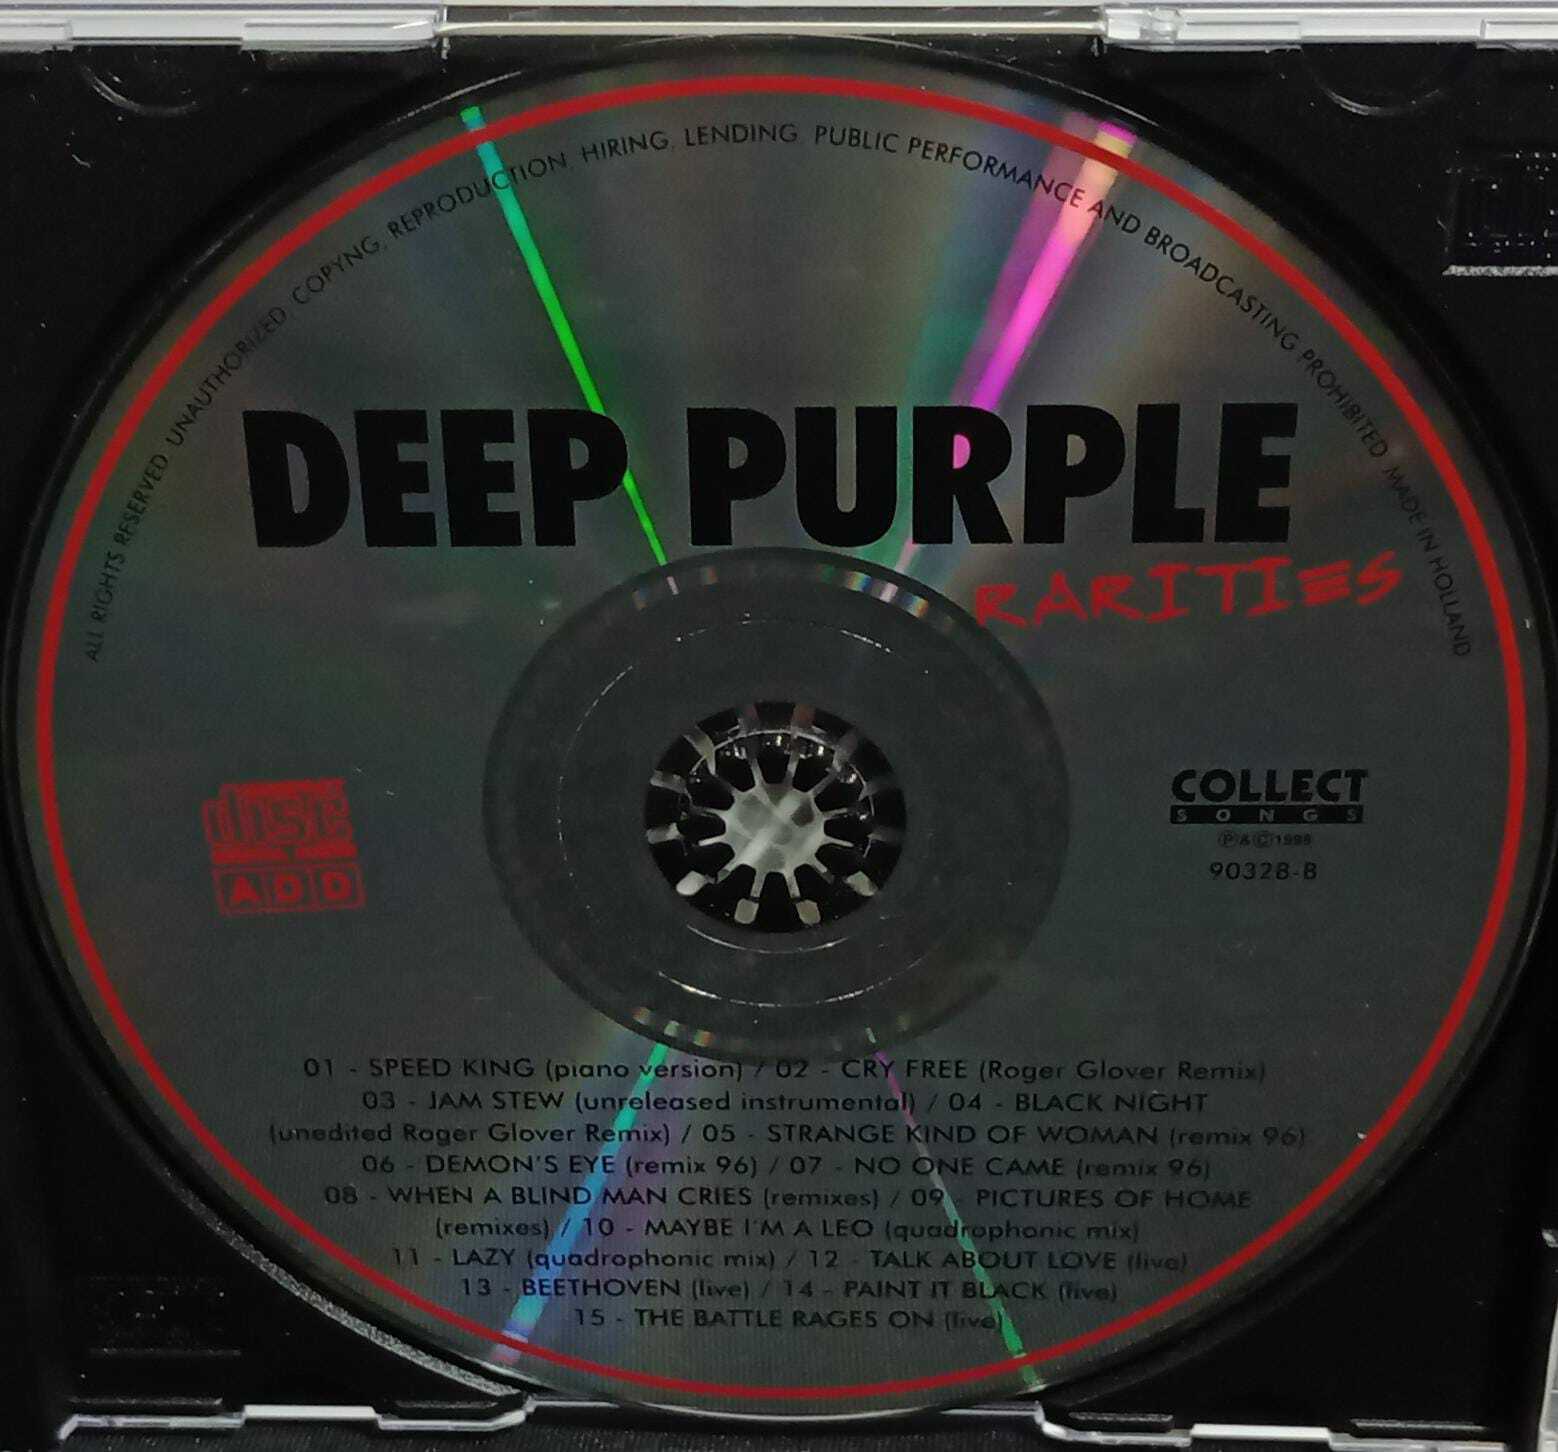 CD - Deep Purple - Rarities (Holland)